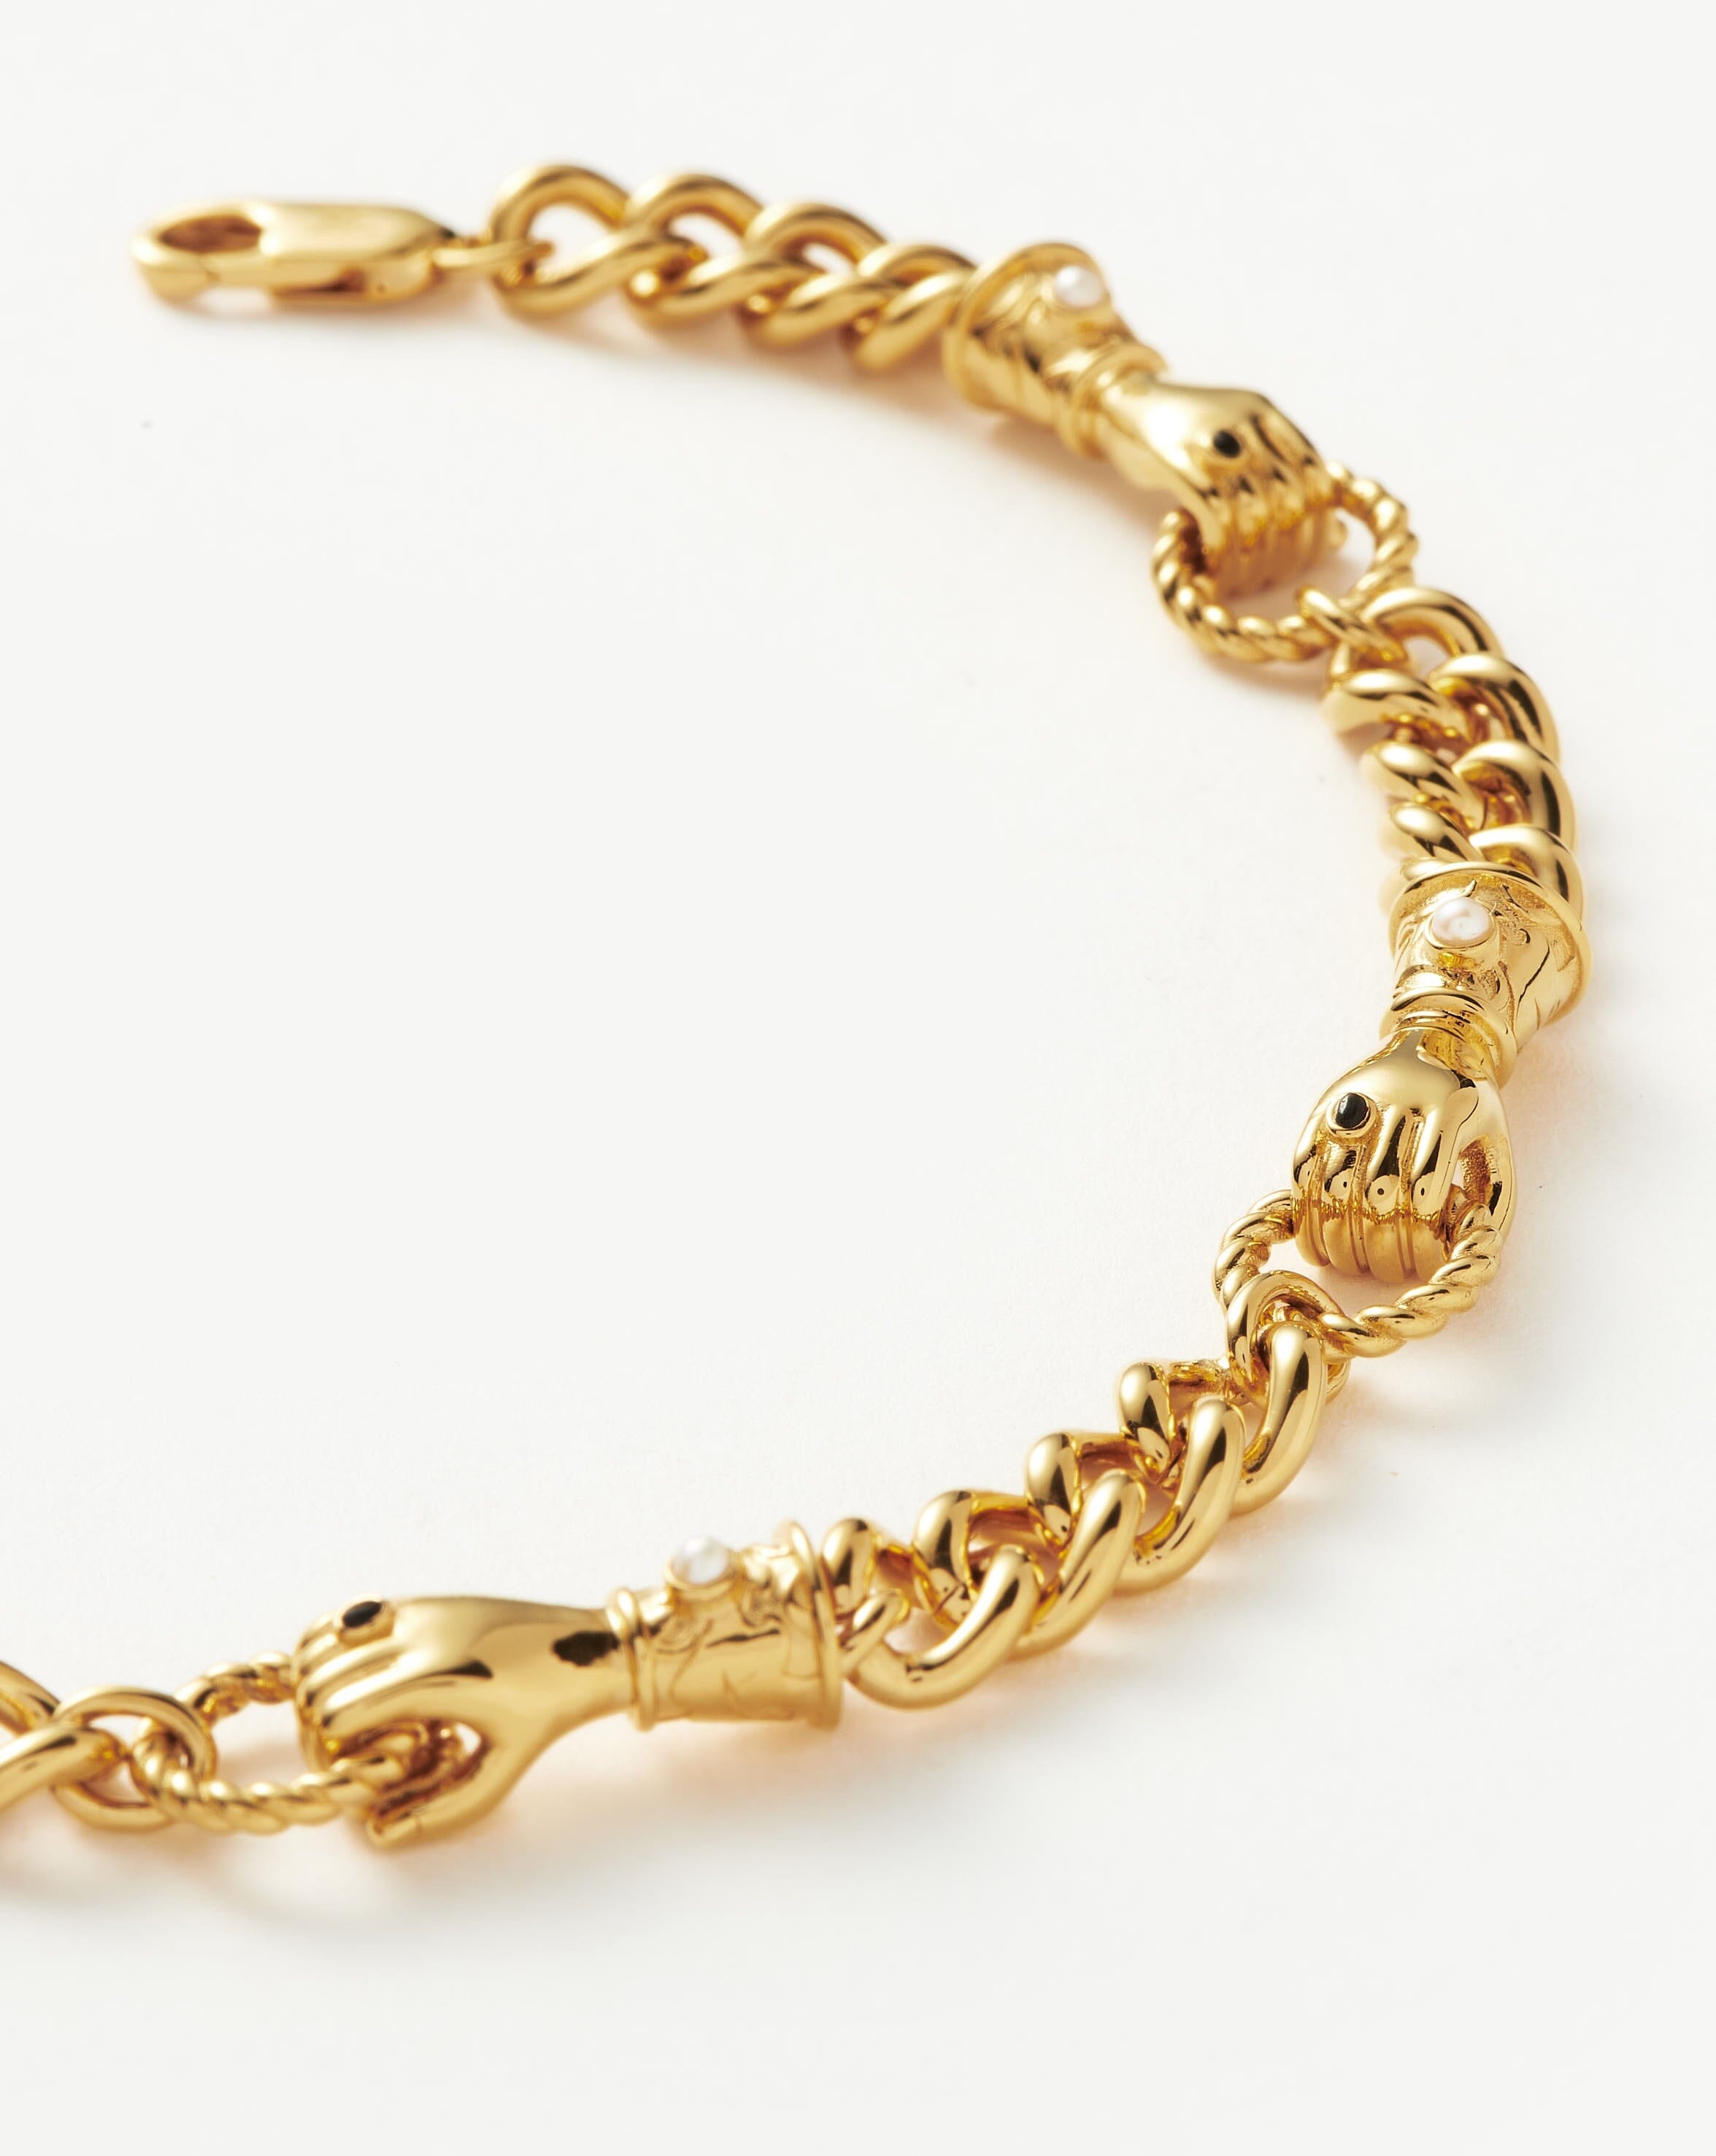 MANGALRAJ Gold Bracelets, Gender : GENTS at Rs 1.60 Lakh / Piece in Mumbai  | Mangalraj Jewellers